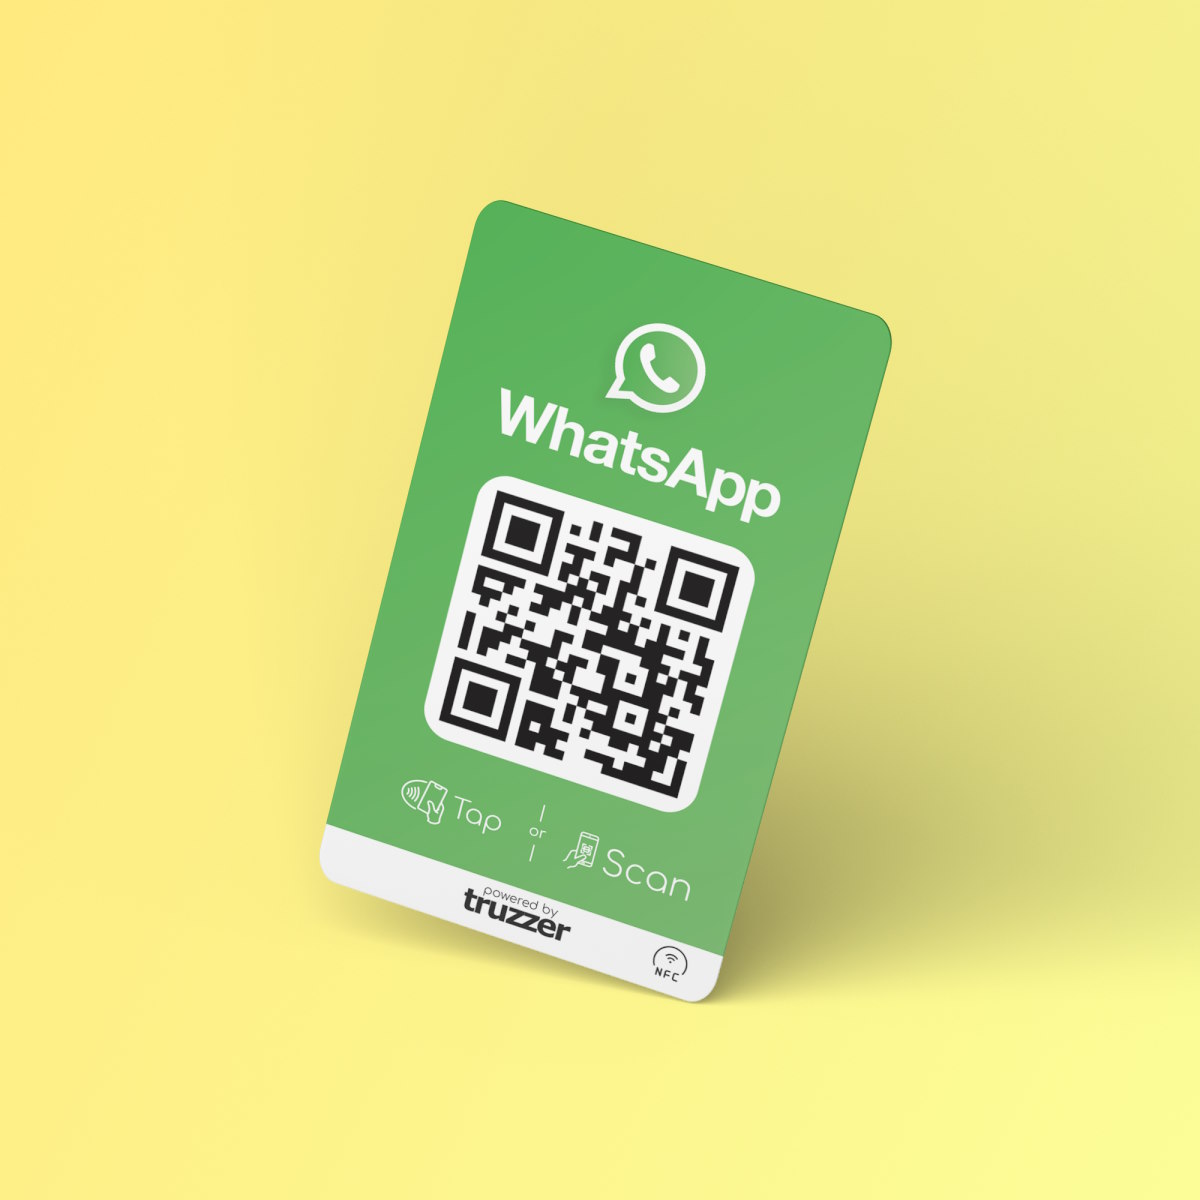 WhatsApp Chat NFC Card “Tap”